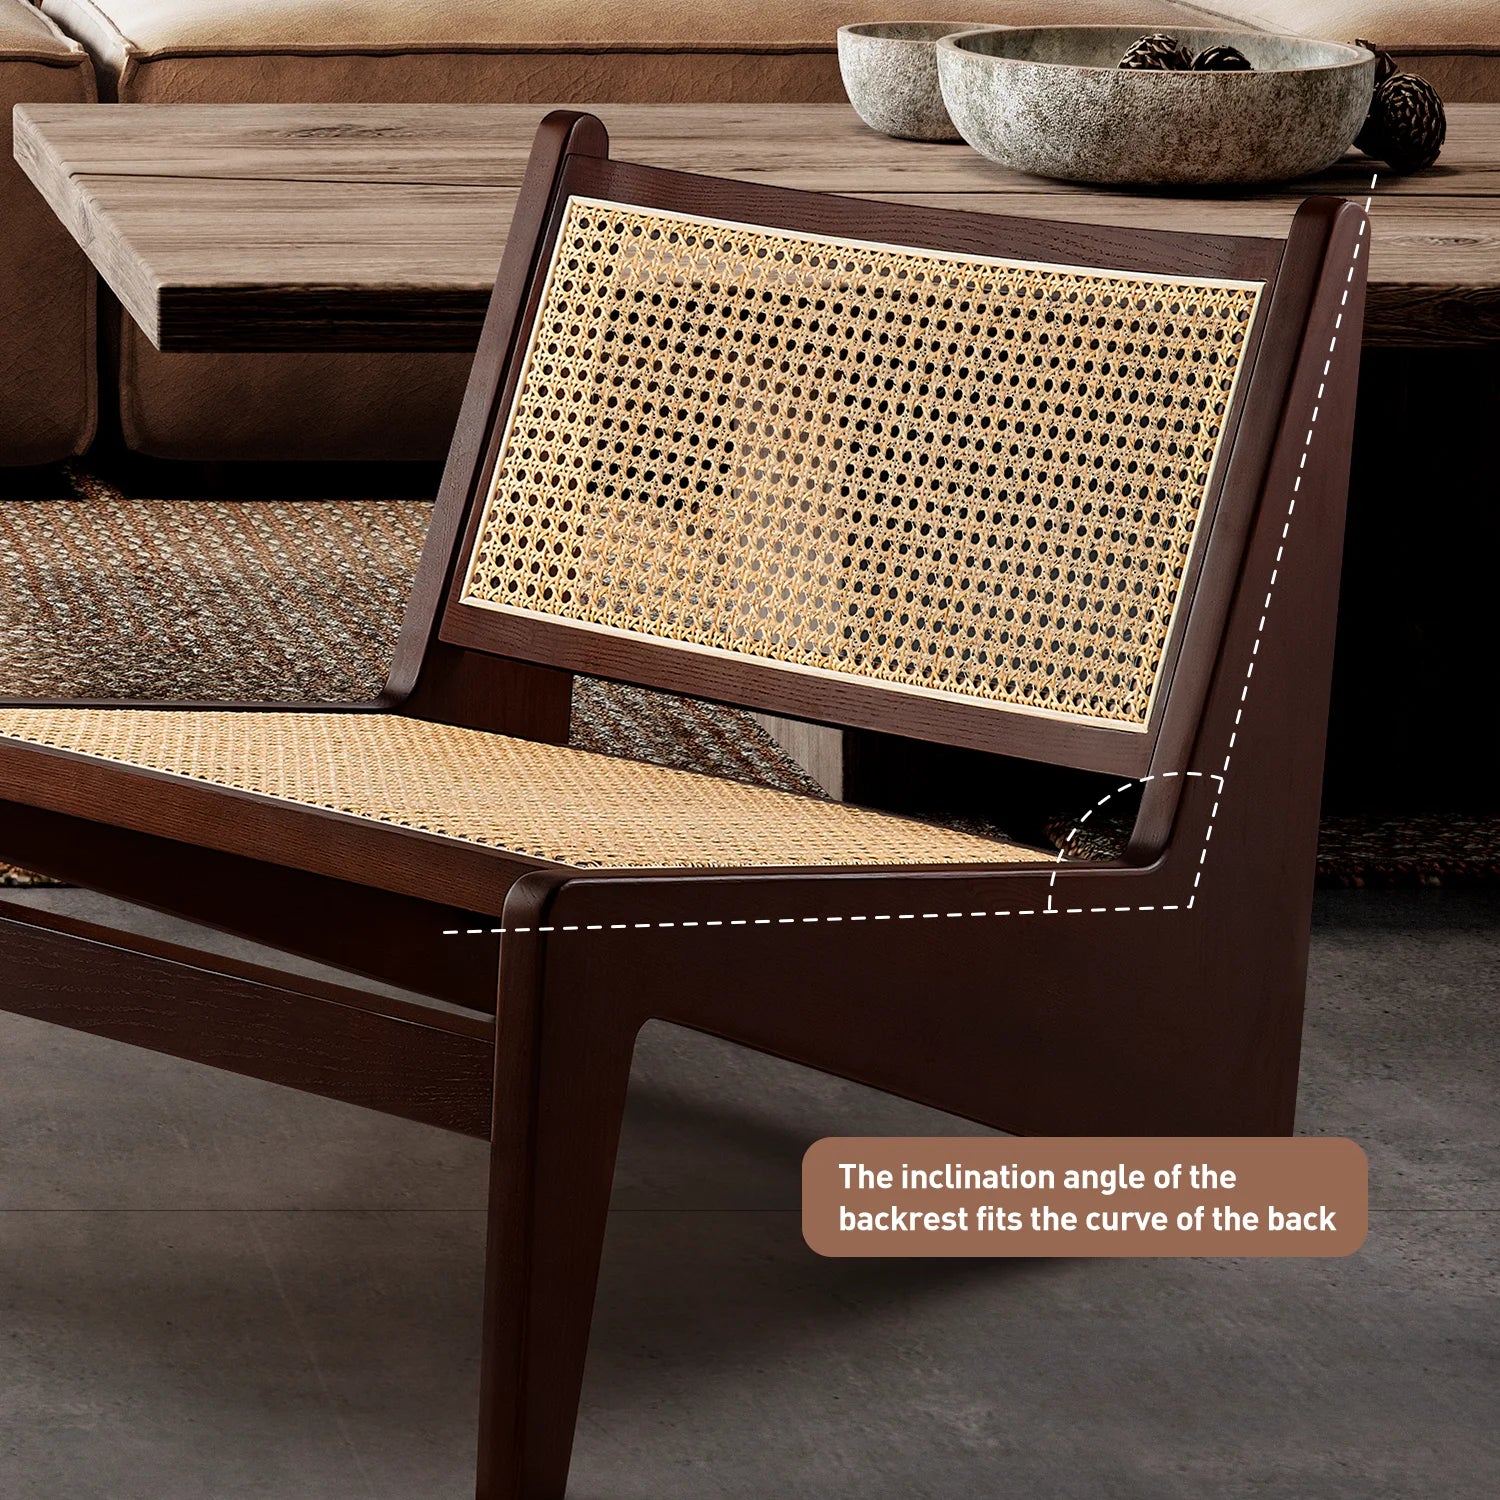 Arthia Designs - Chandigarh Kangaroo Wood Rattan Chair - Review